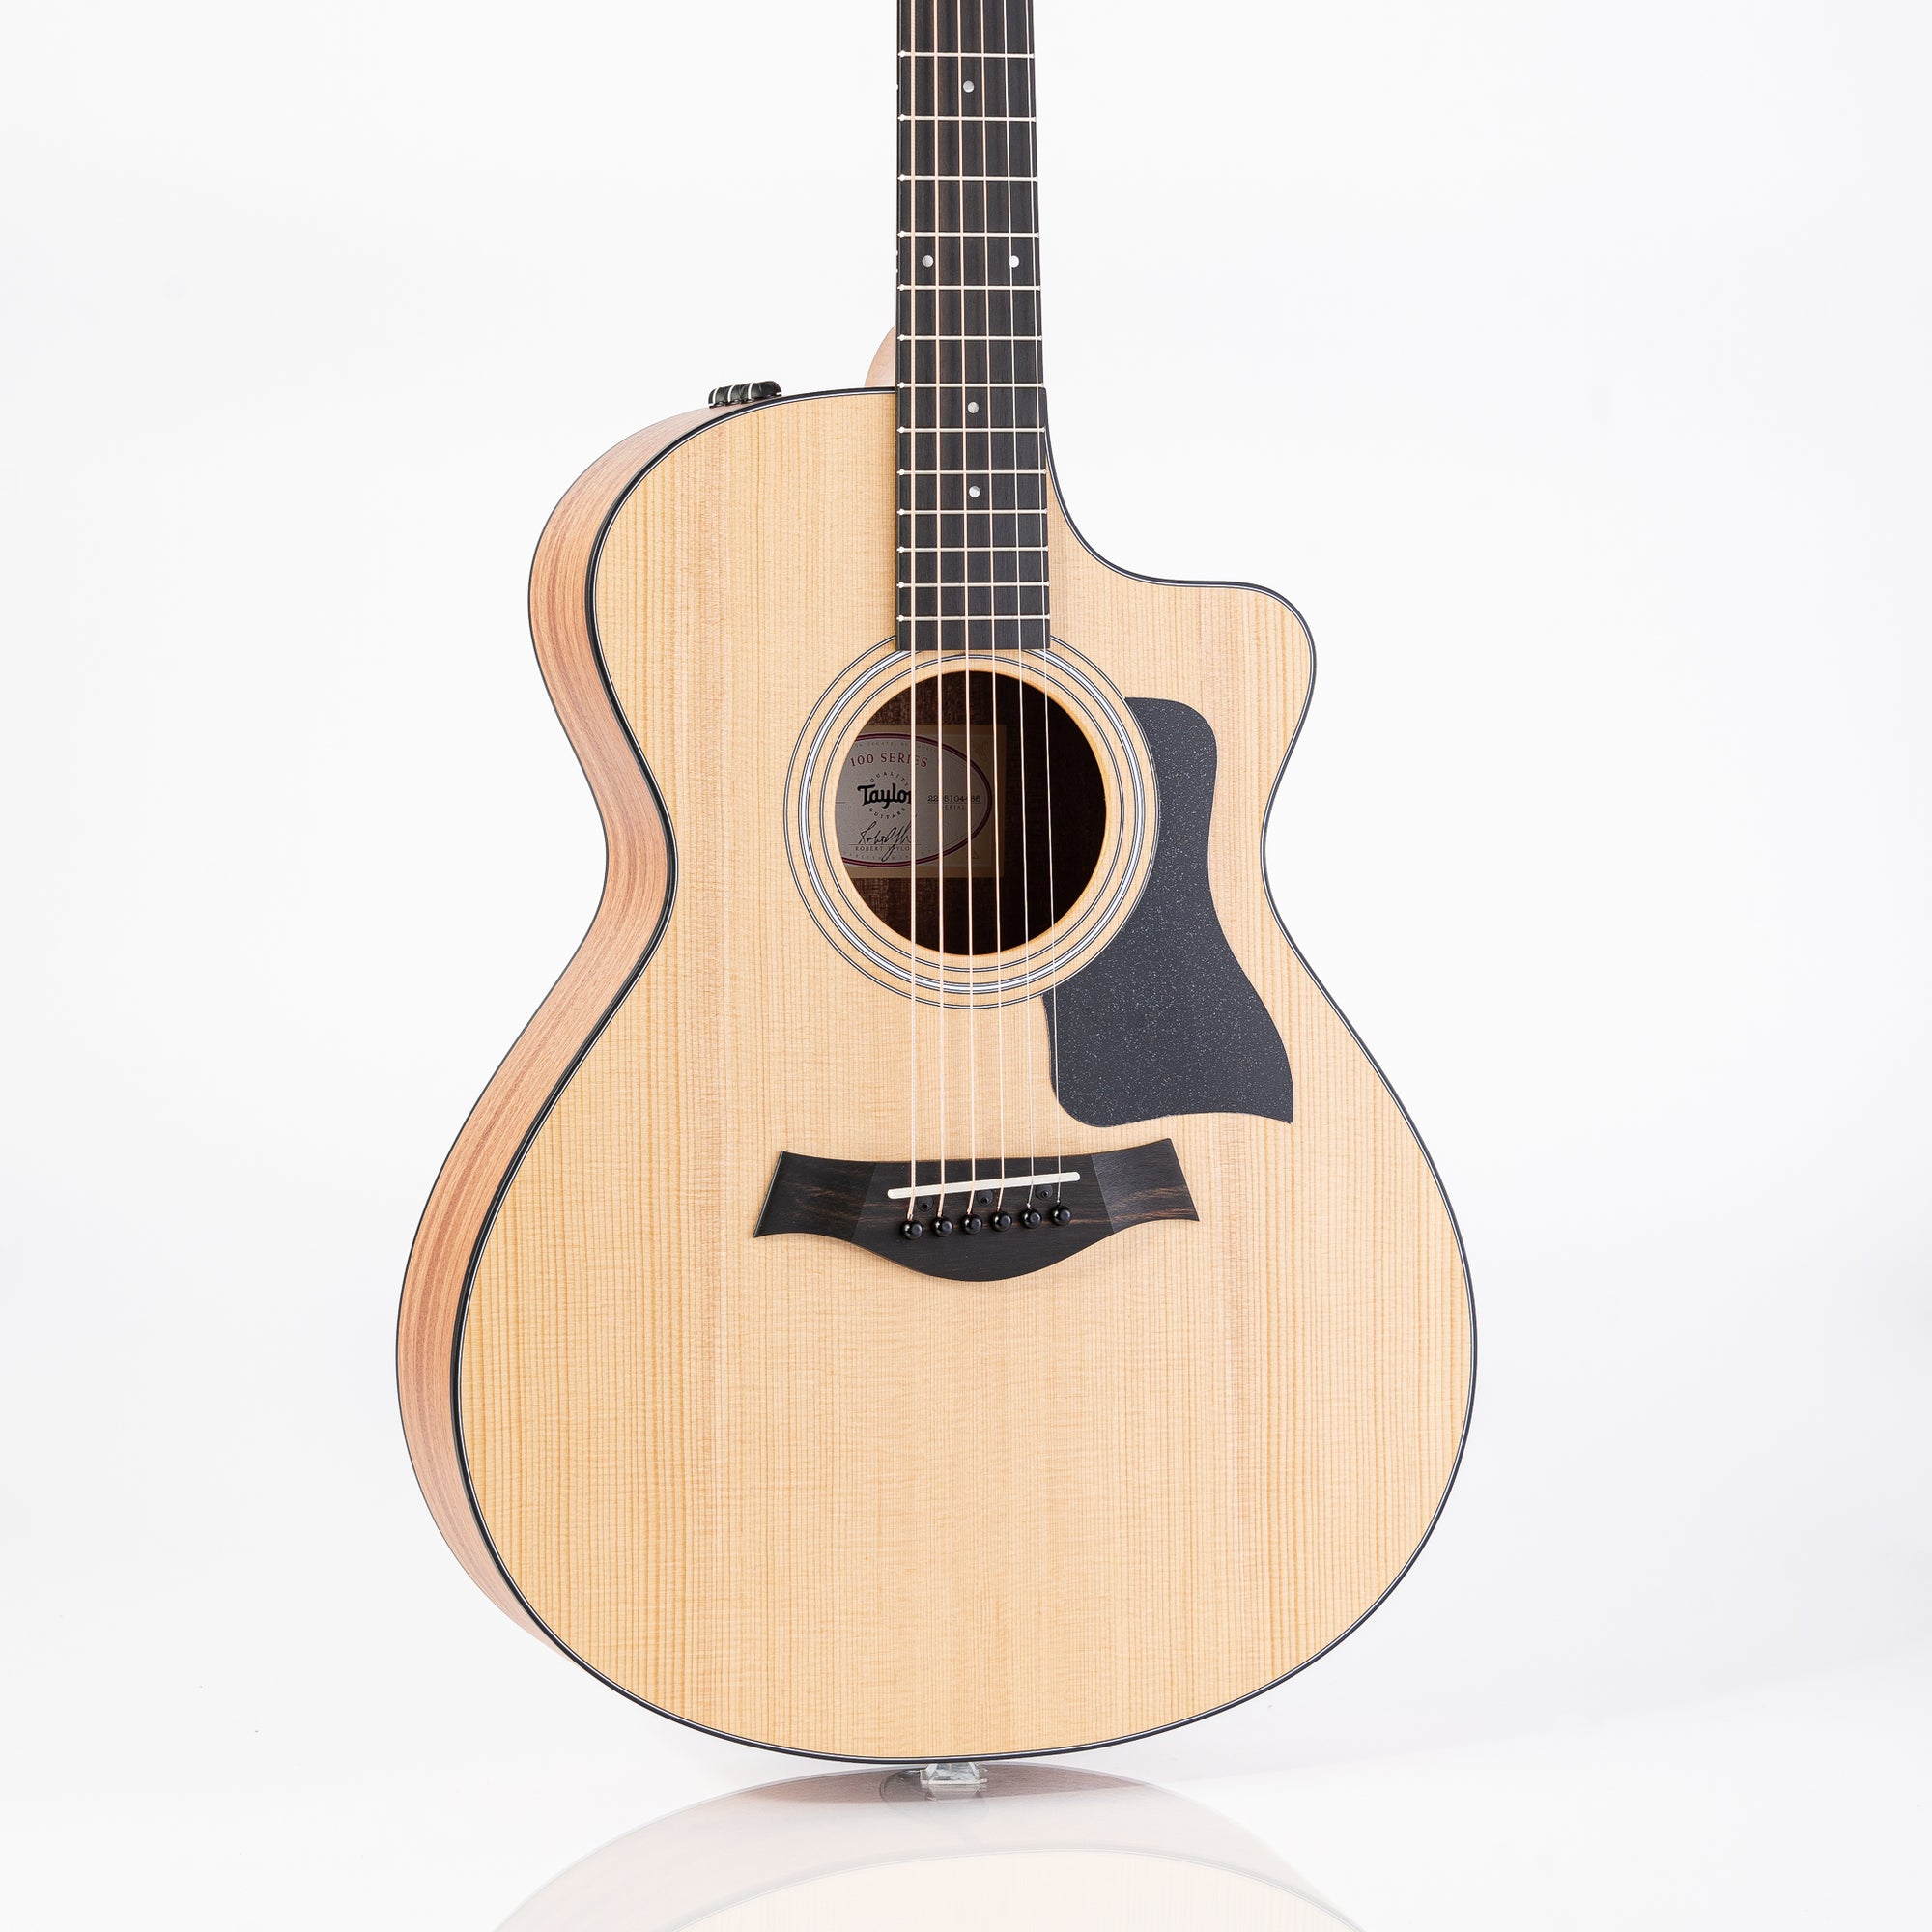 Taylor 112ce Sapele/Spruce Acoustic Electric Guitar - Natural